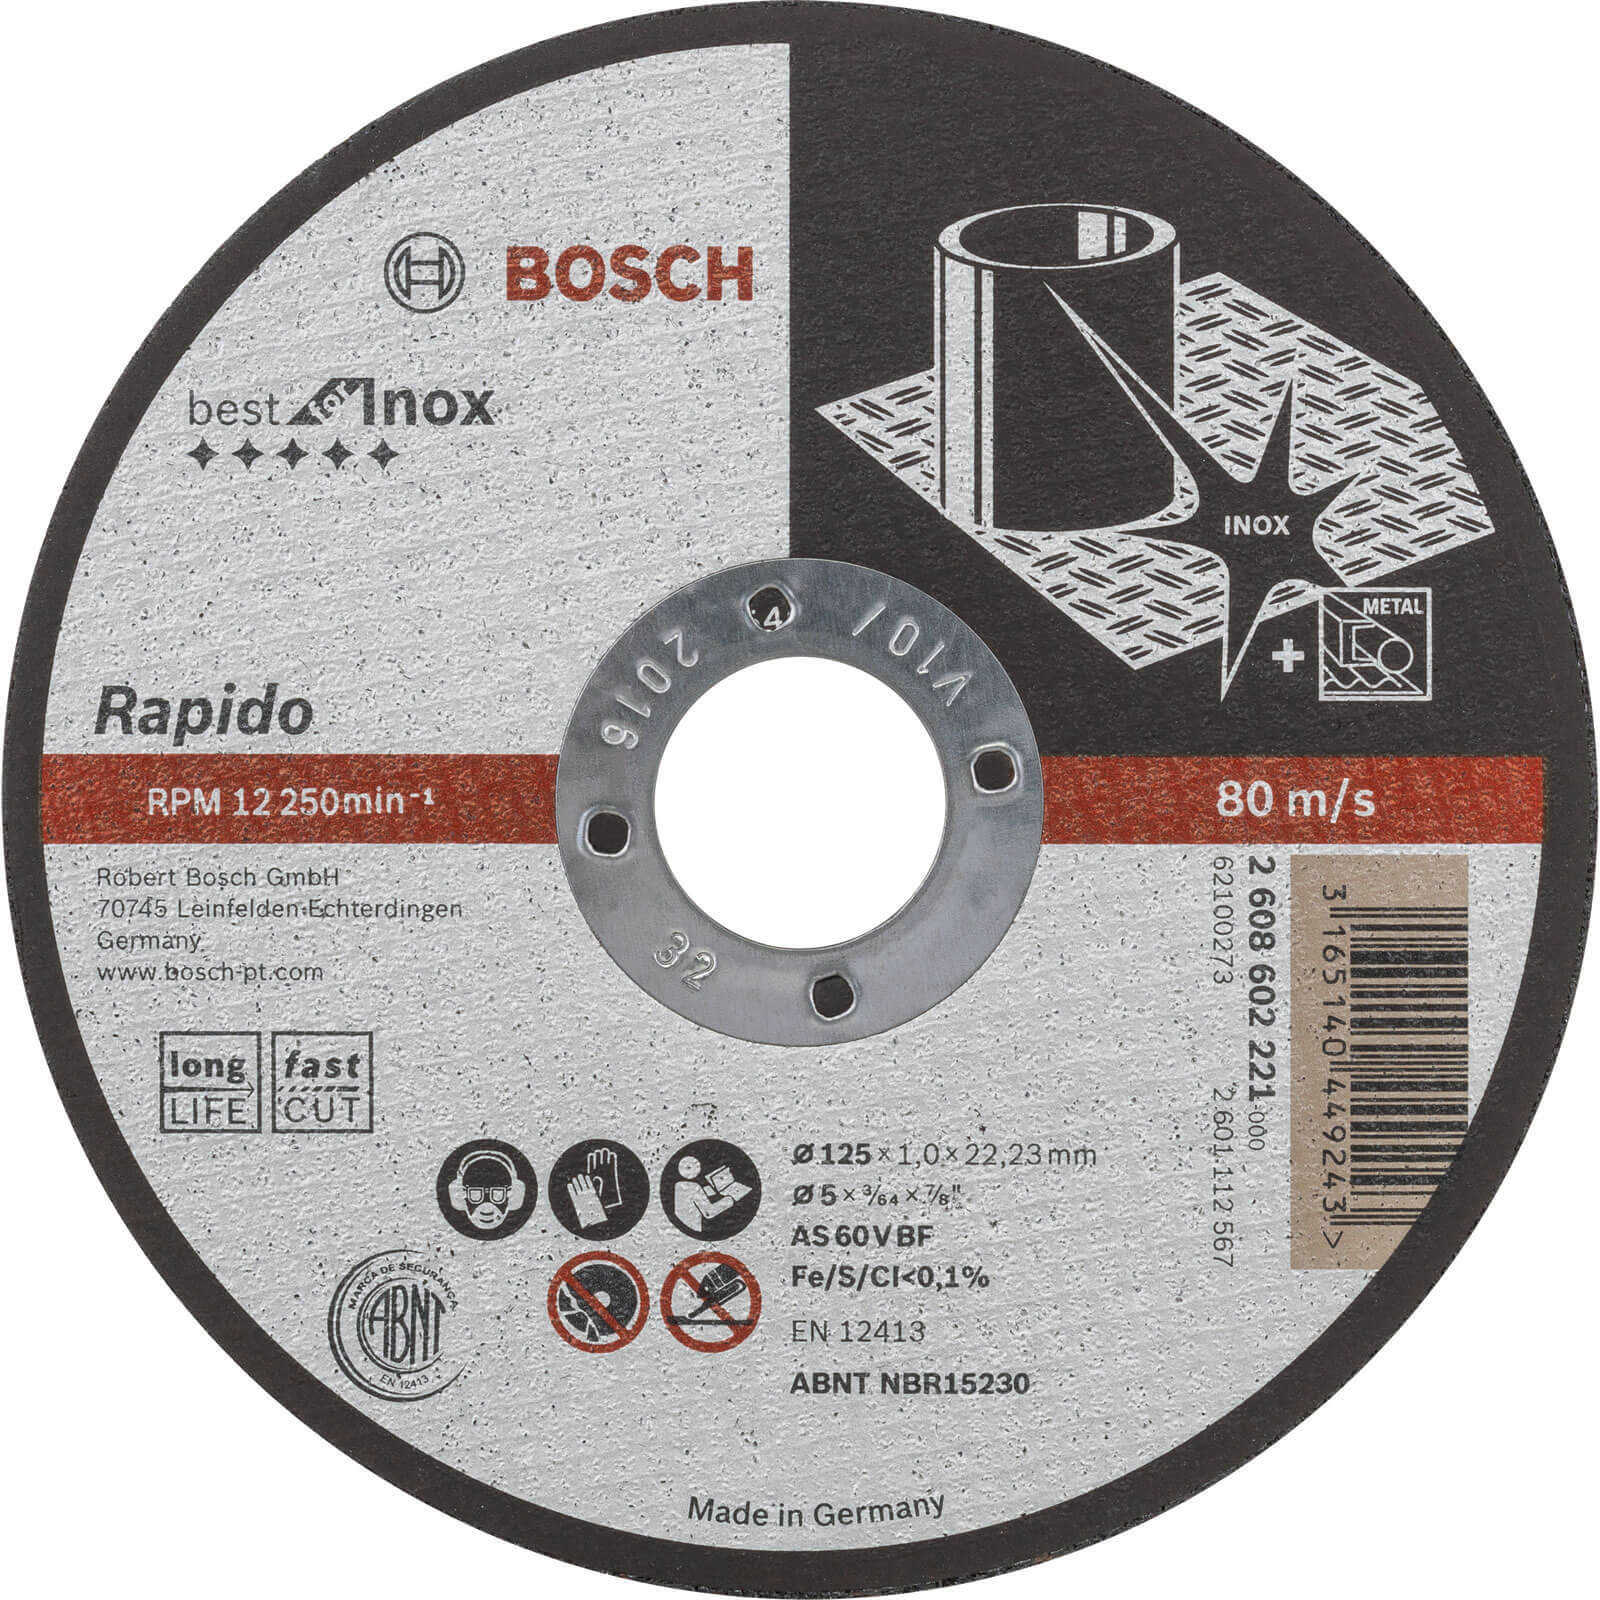 Photo of Bosch Rapido Best Inox Cutting Disc 125mm 1mm 22mm